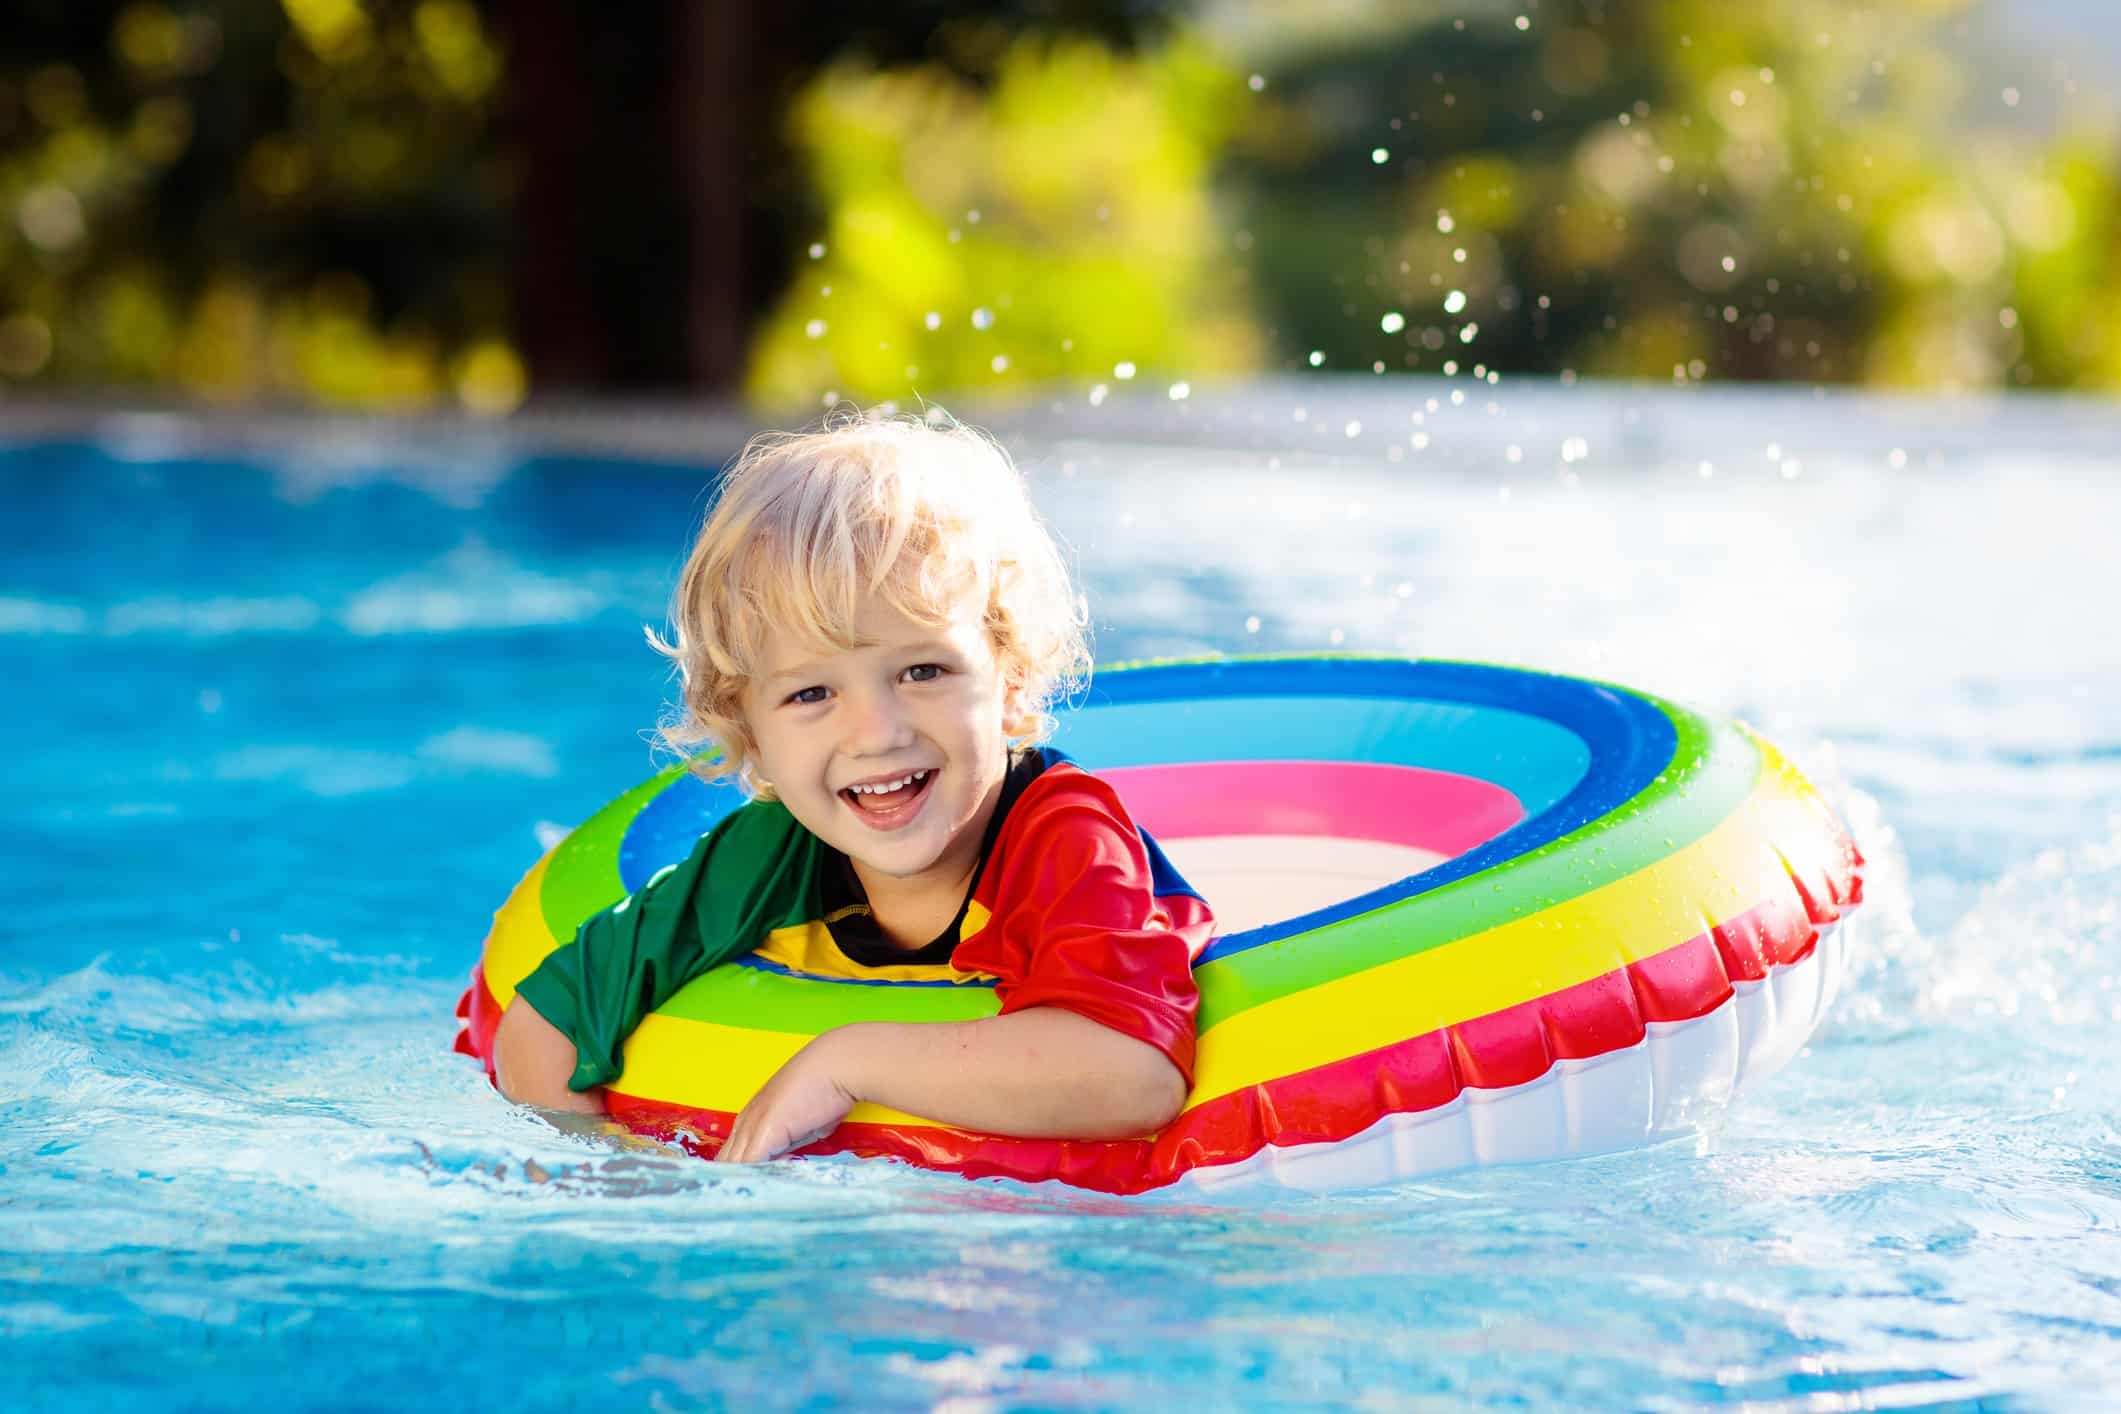 Boy in inner tube splashing in pool